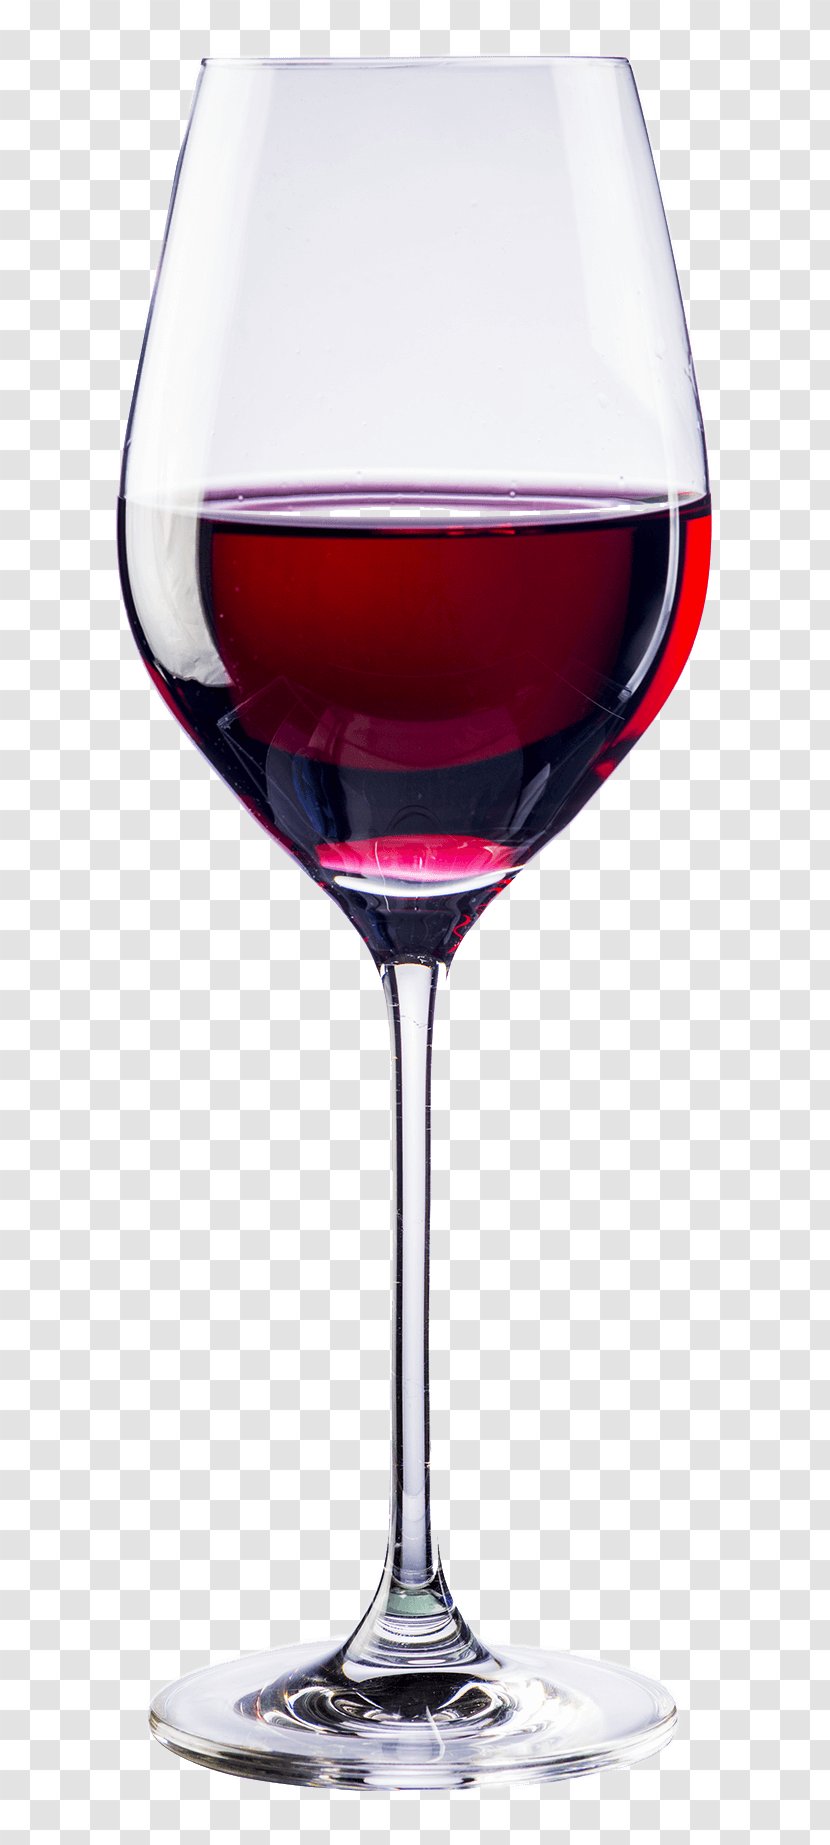 Red Wine Glass Tasting Bottle - Champagne Stemware Transparent PNG